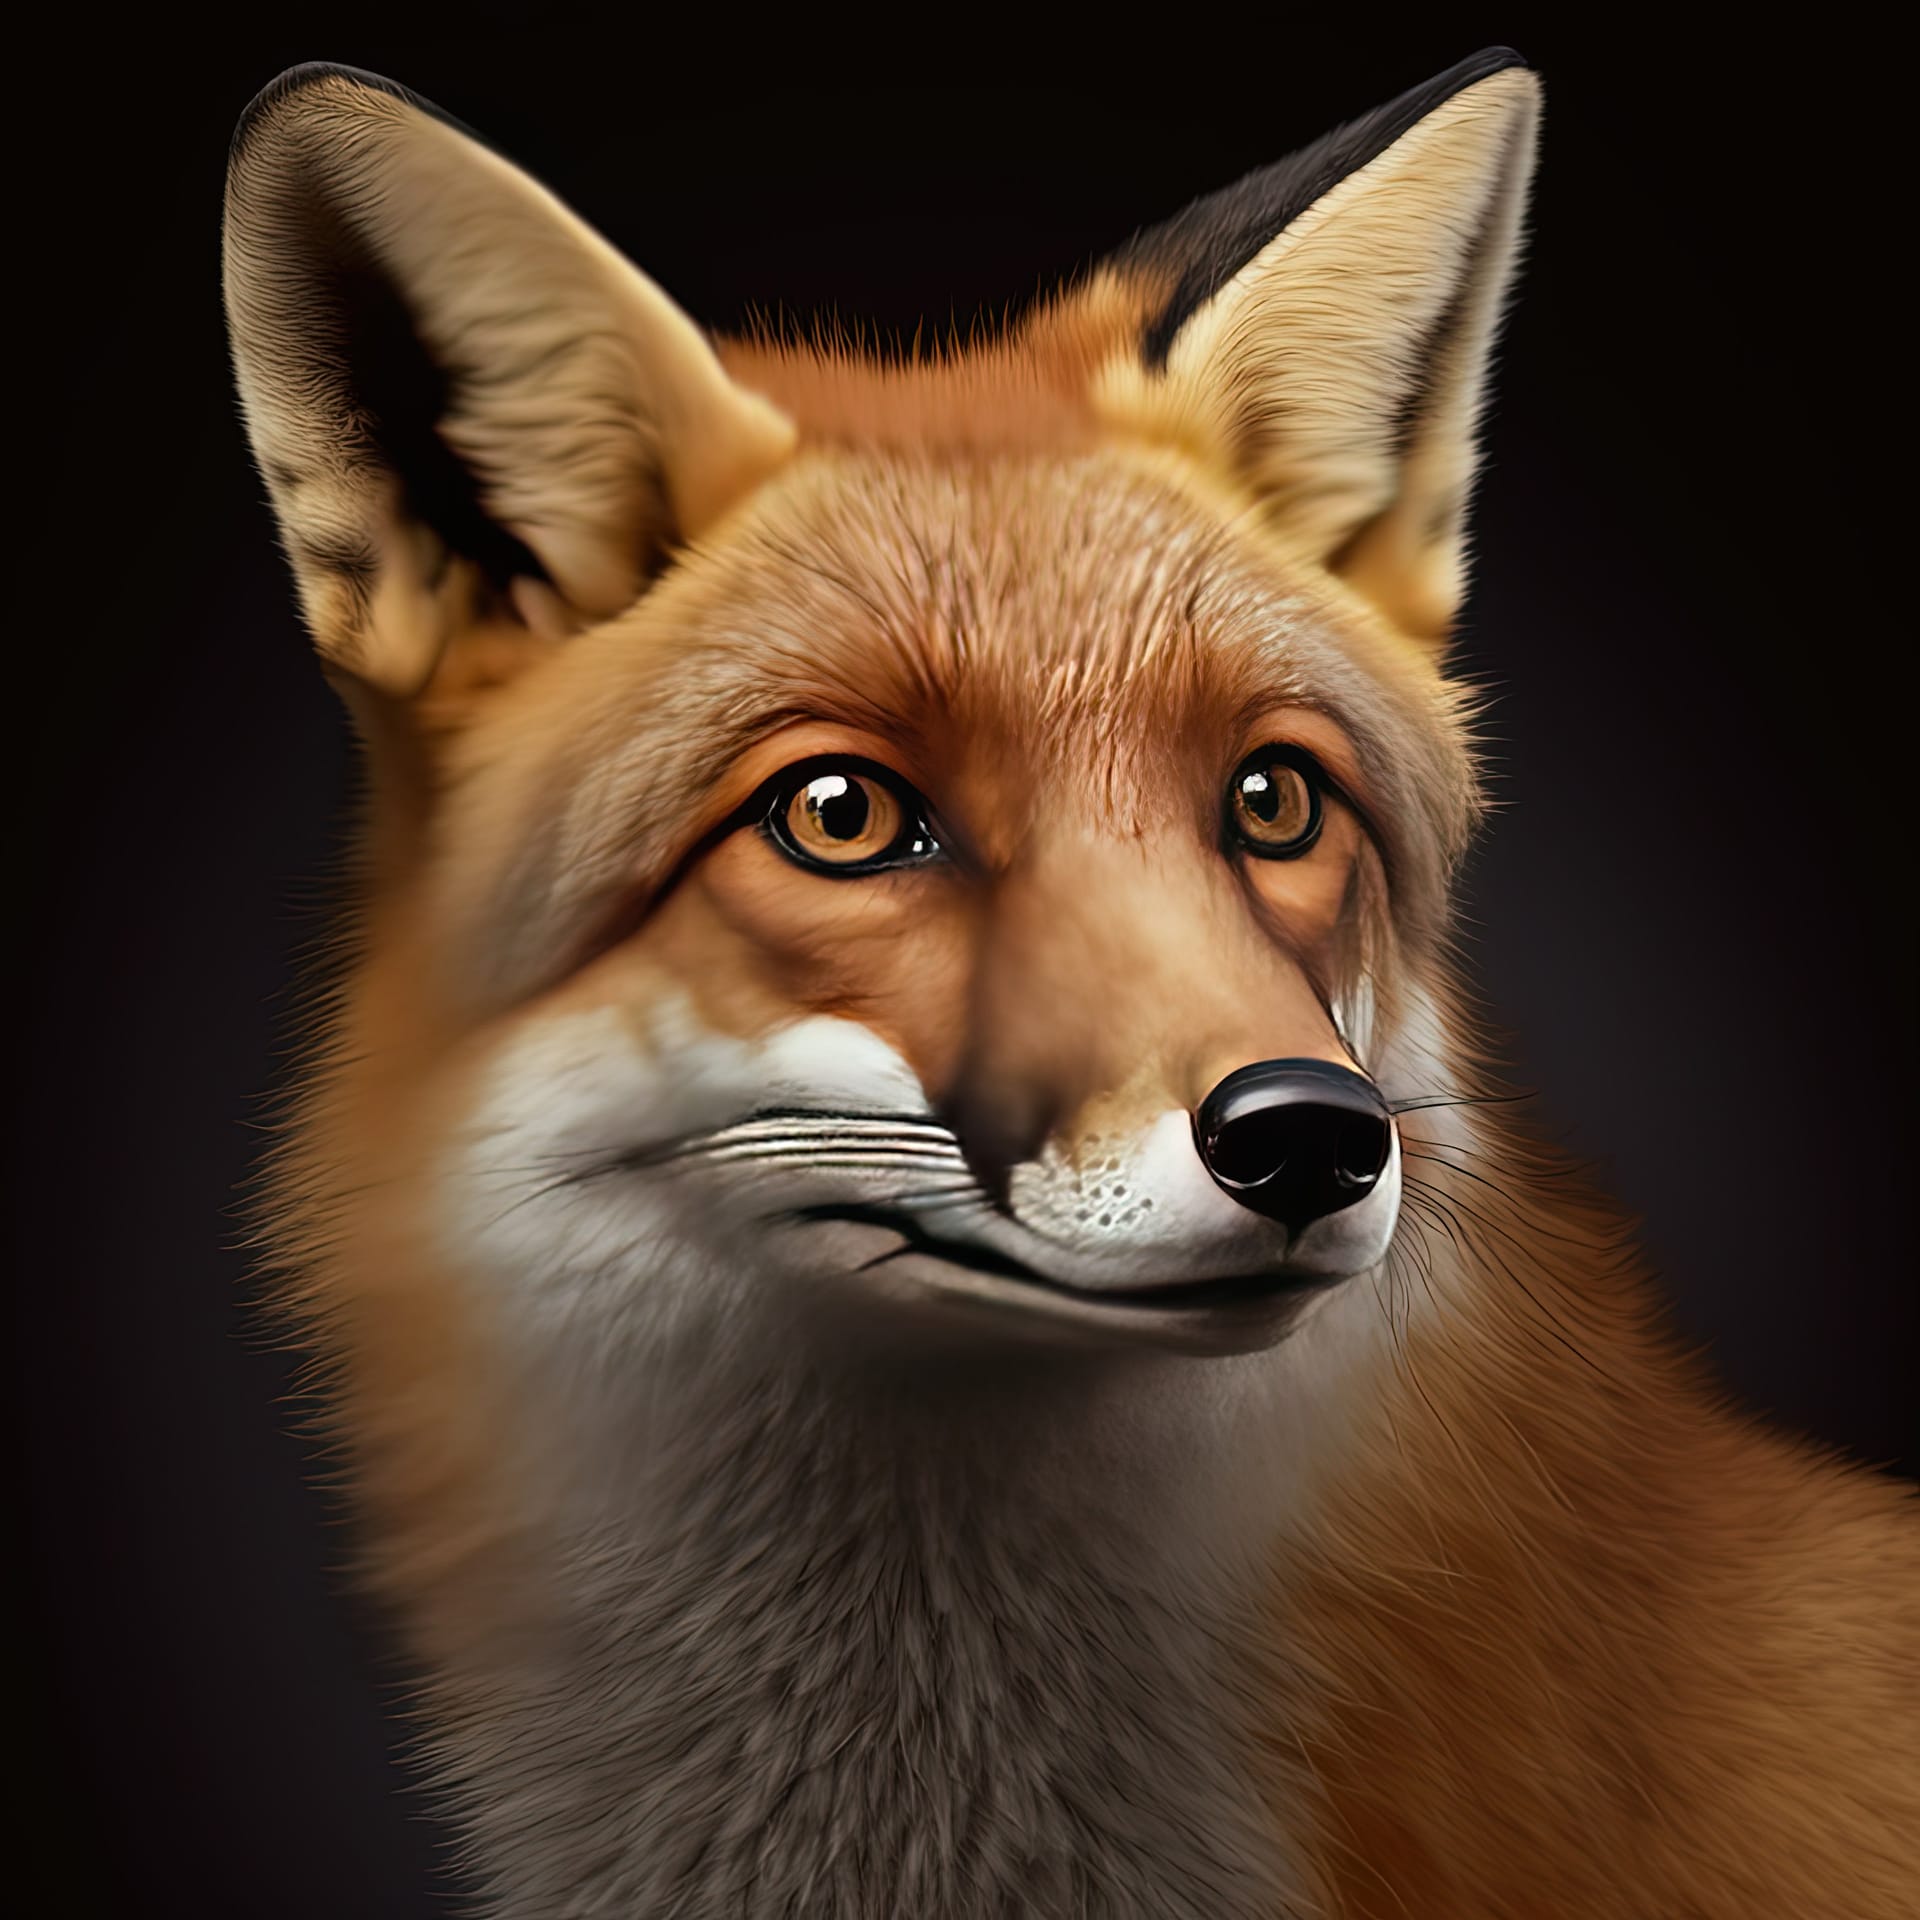 Fox portrait studio ultra realistic image gerenarive